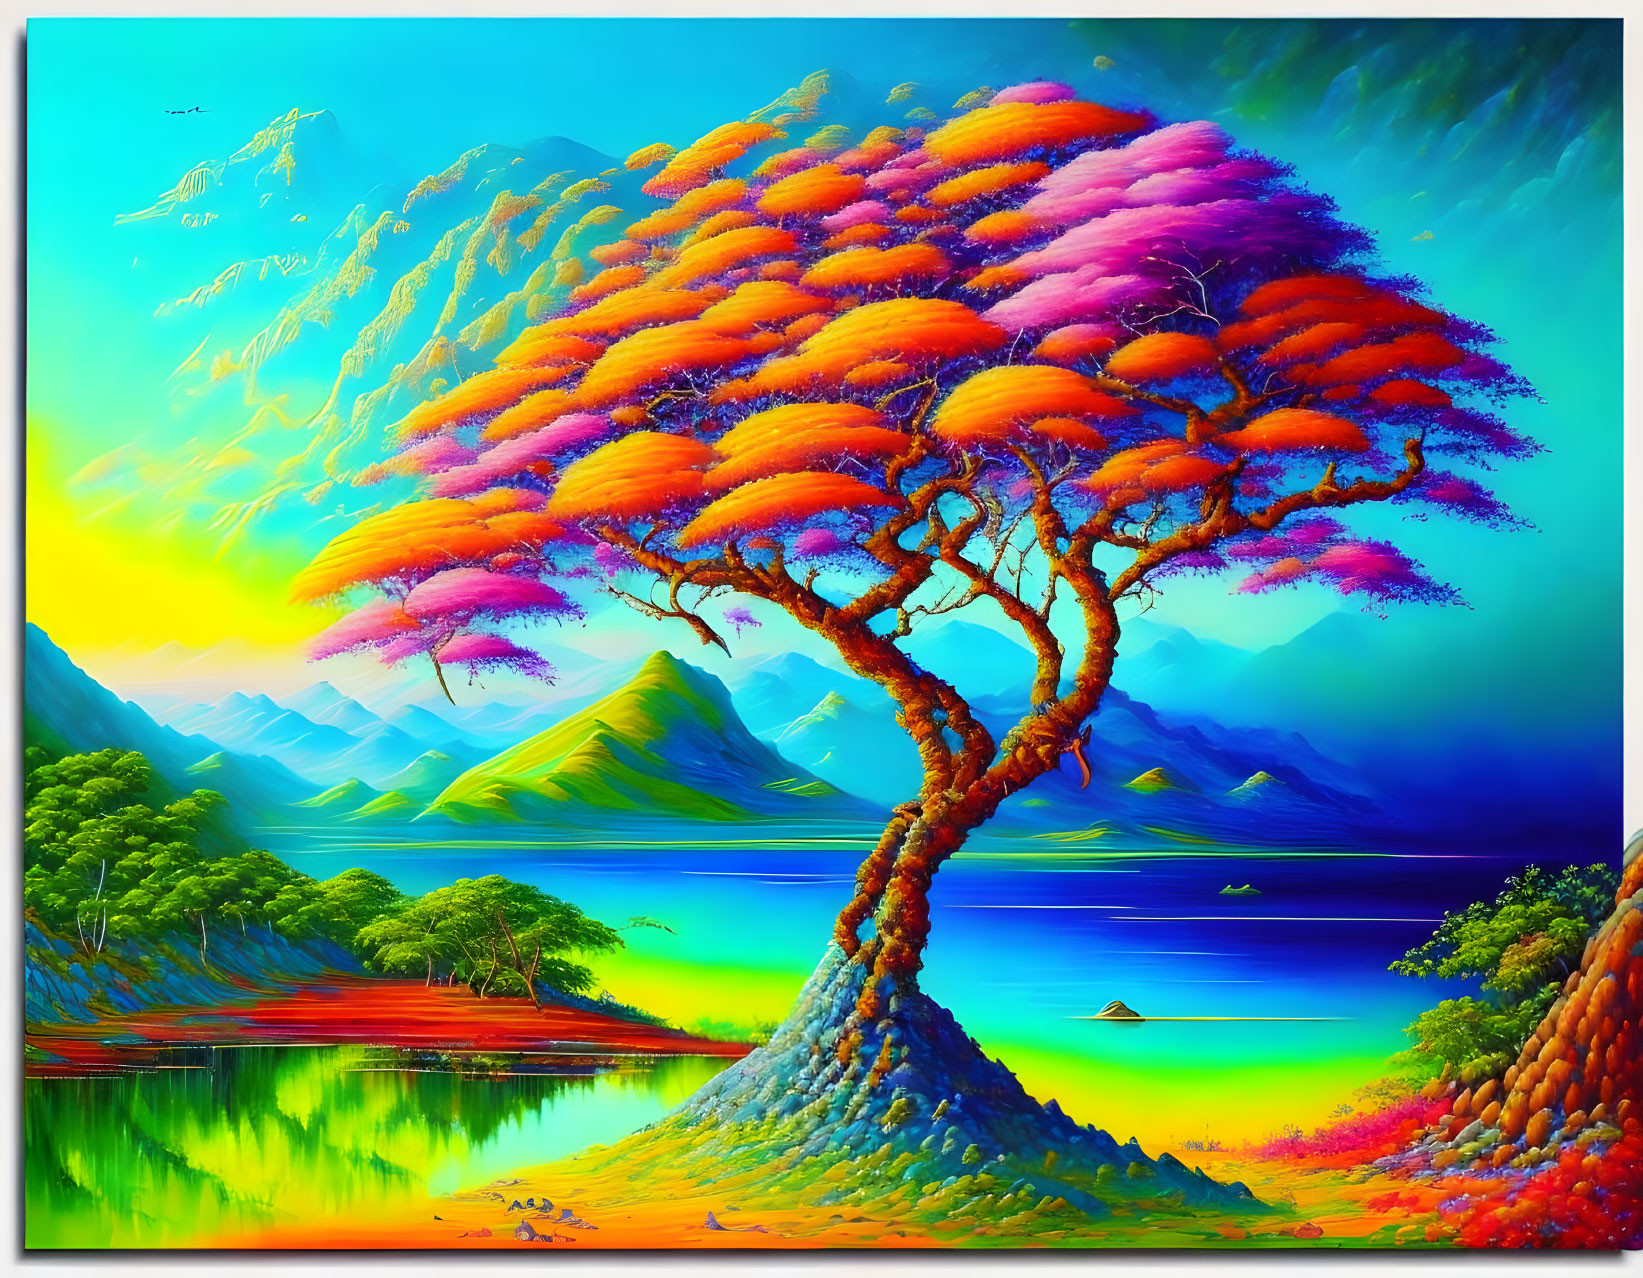 Colorful Landscape Painting: Twisted Tree, Blue Lake, Mountain Range